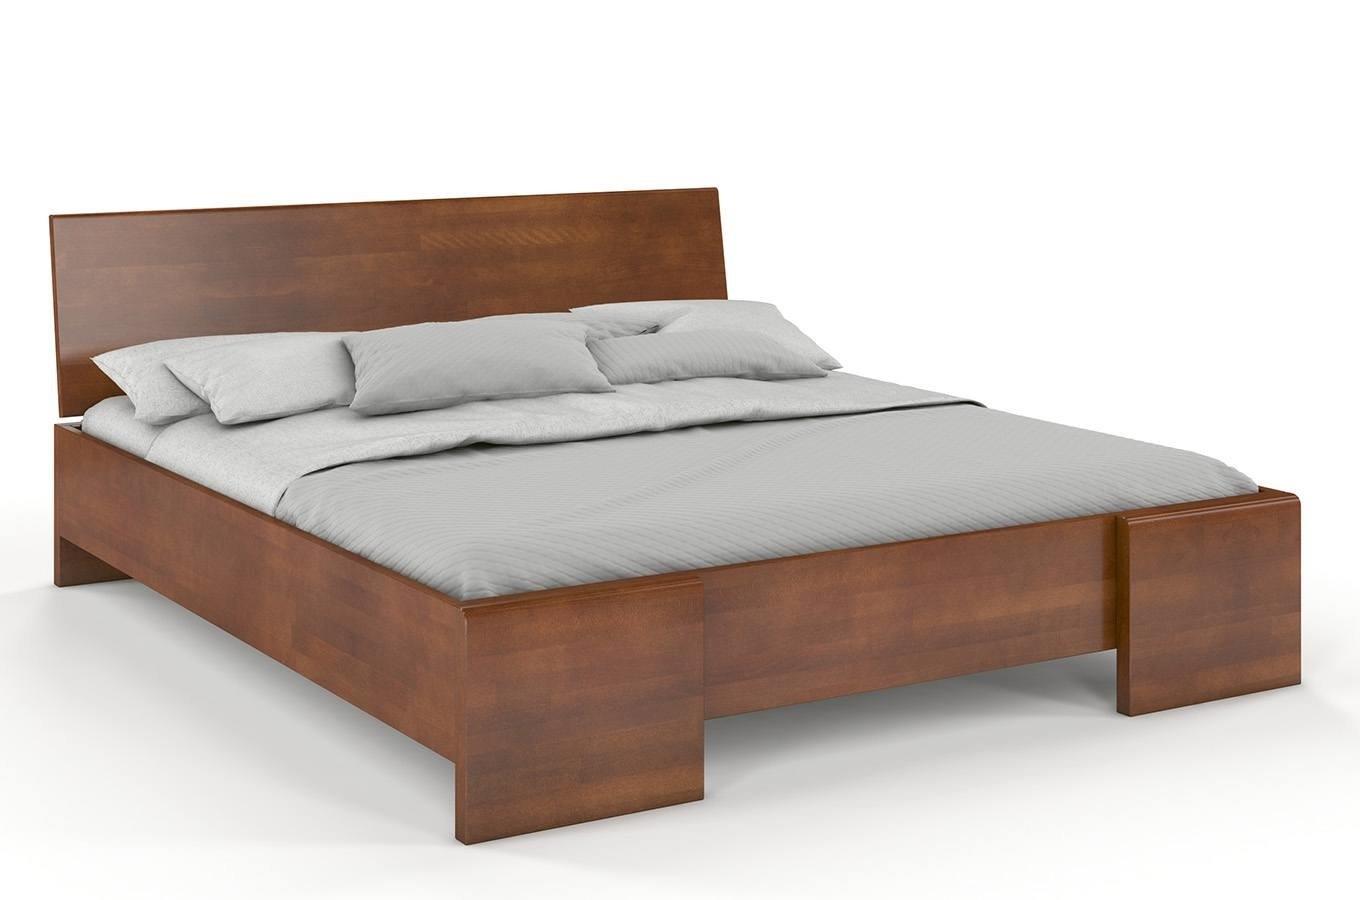 Łóżko drewniane bukowe Visby HESSLER High & LONG (długość + 20 cm) / 200x220 cm, kolor orzech